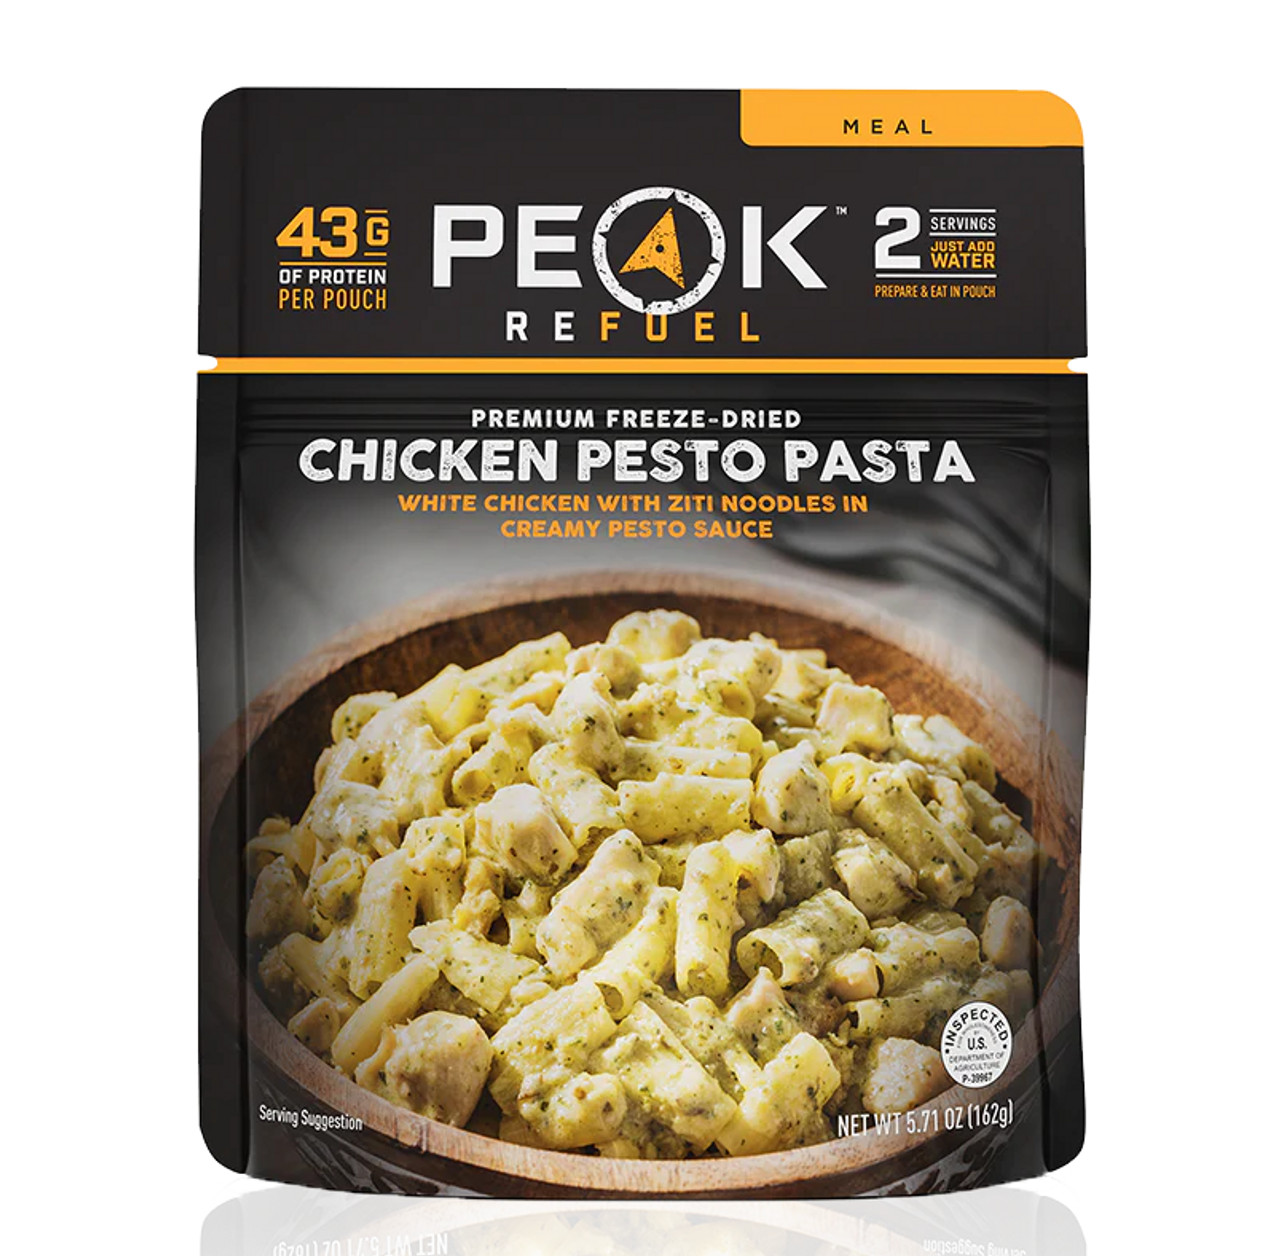 Chicken Pesto Pasta - Peak Refuel